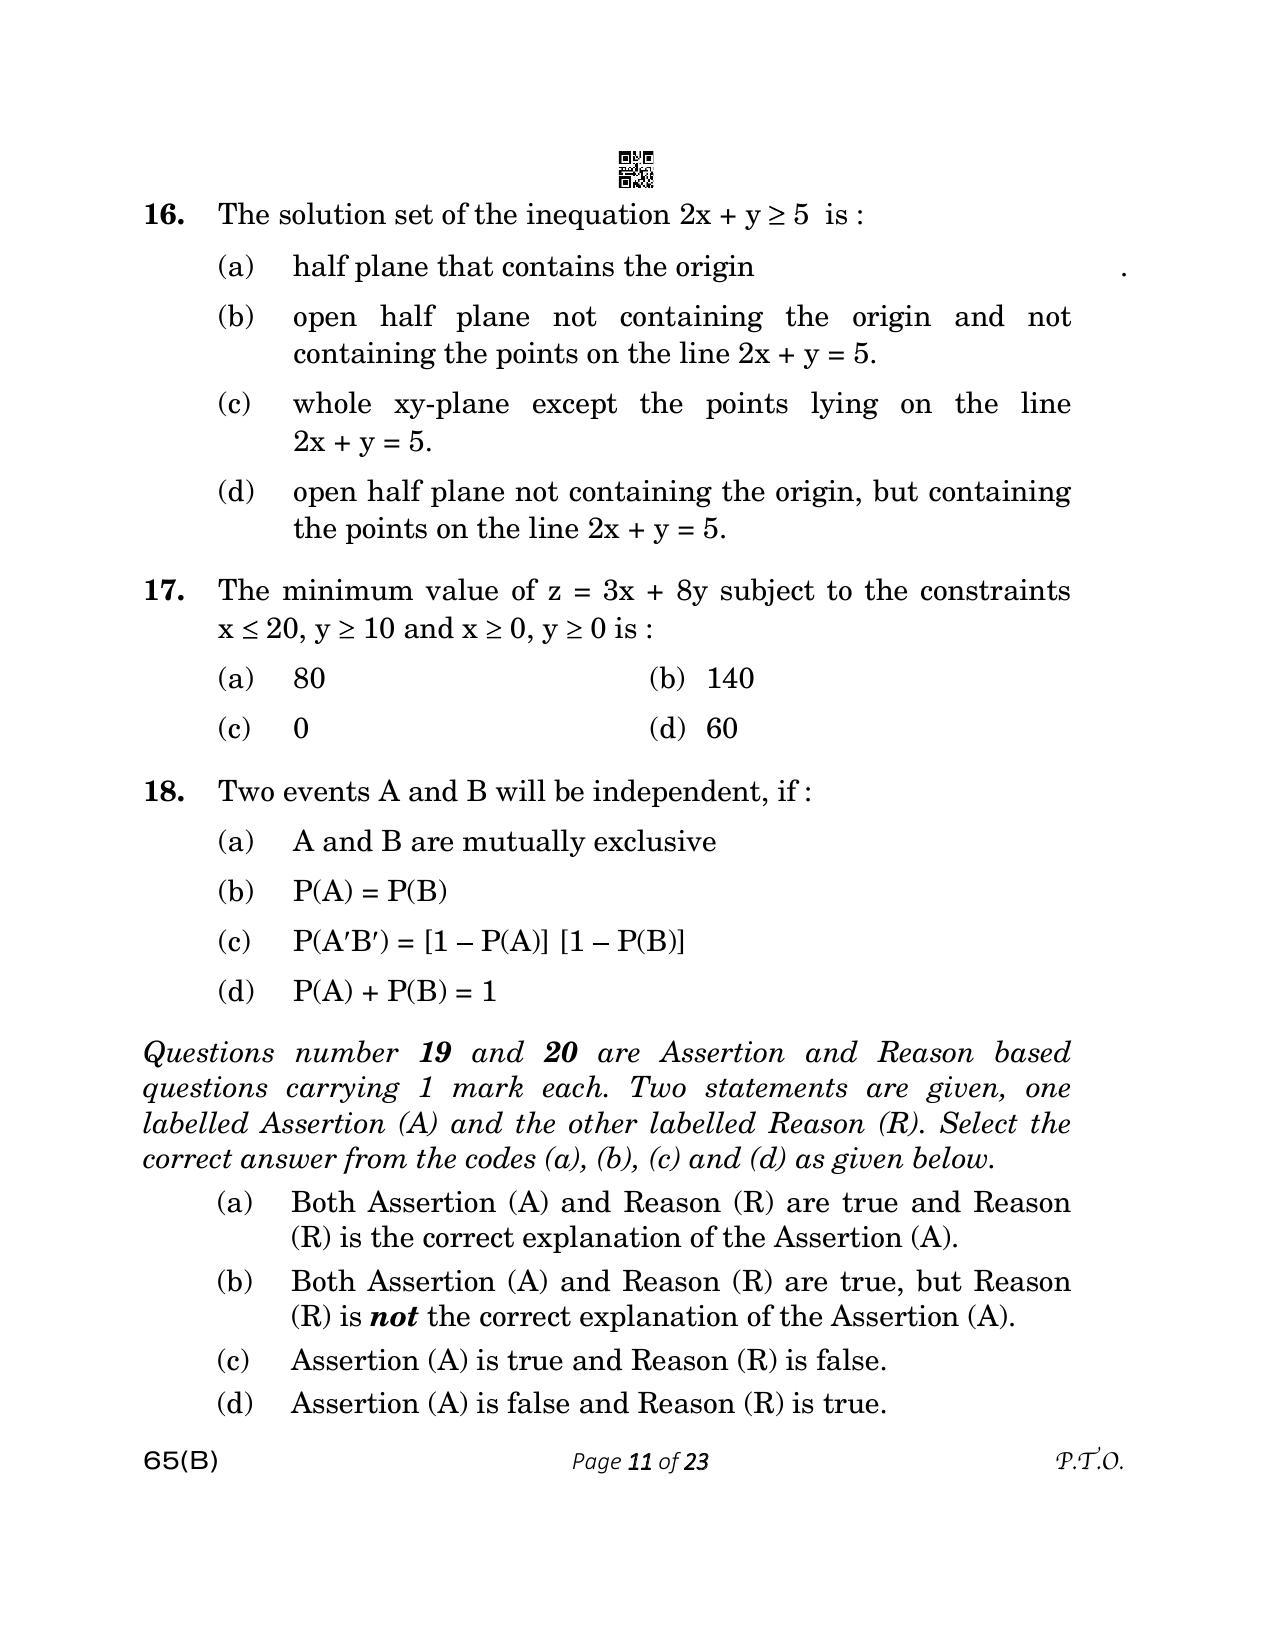 CBSE Class 12 65(B) MATHEMATICS FOR VI 2023 Question Paper - Page 11